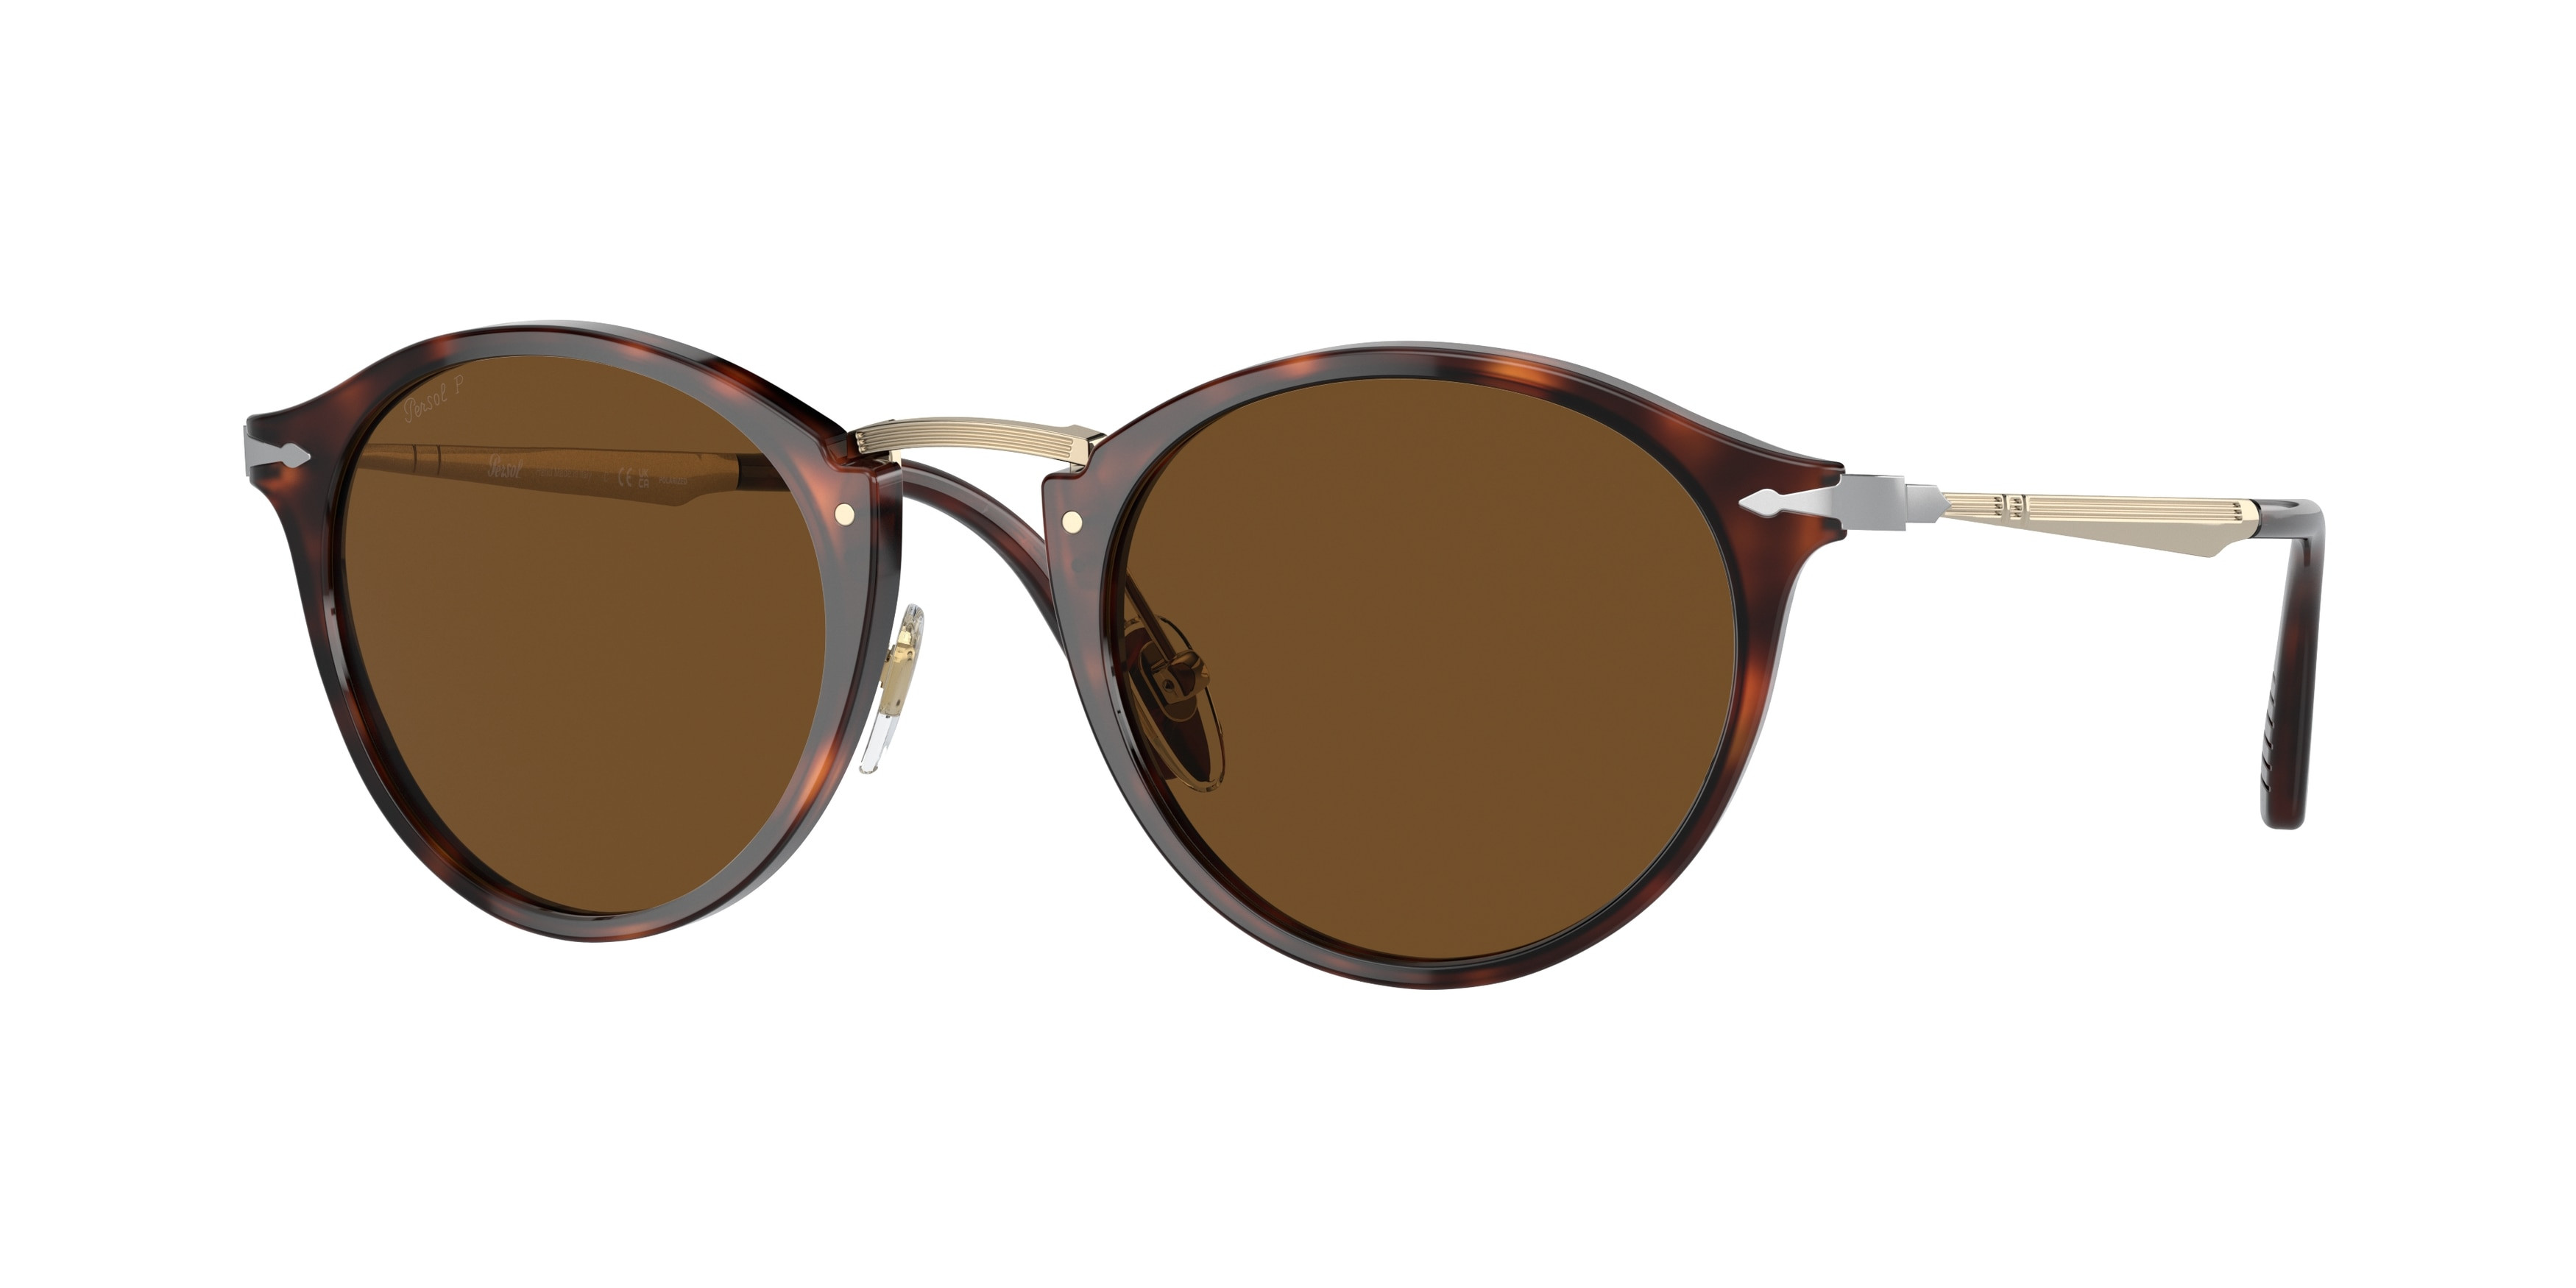 Persol Men's Polarized PO3166S-24/57-51 Brown Round Sunglasses - image 1 of 3